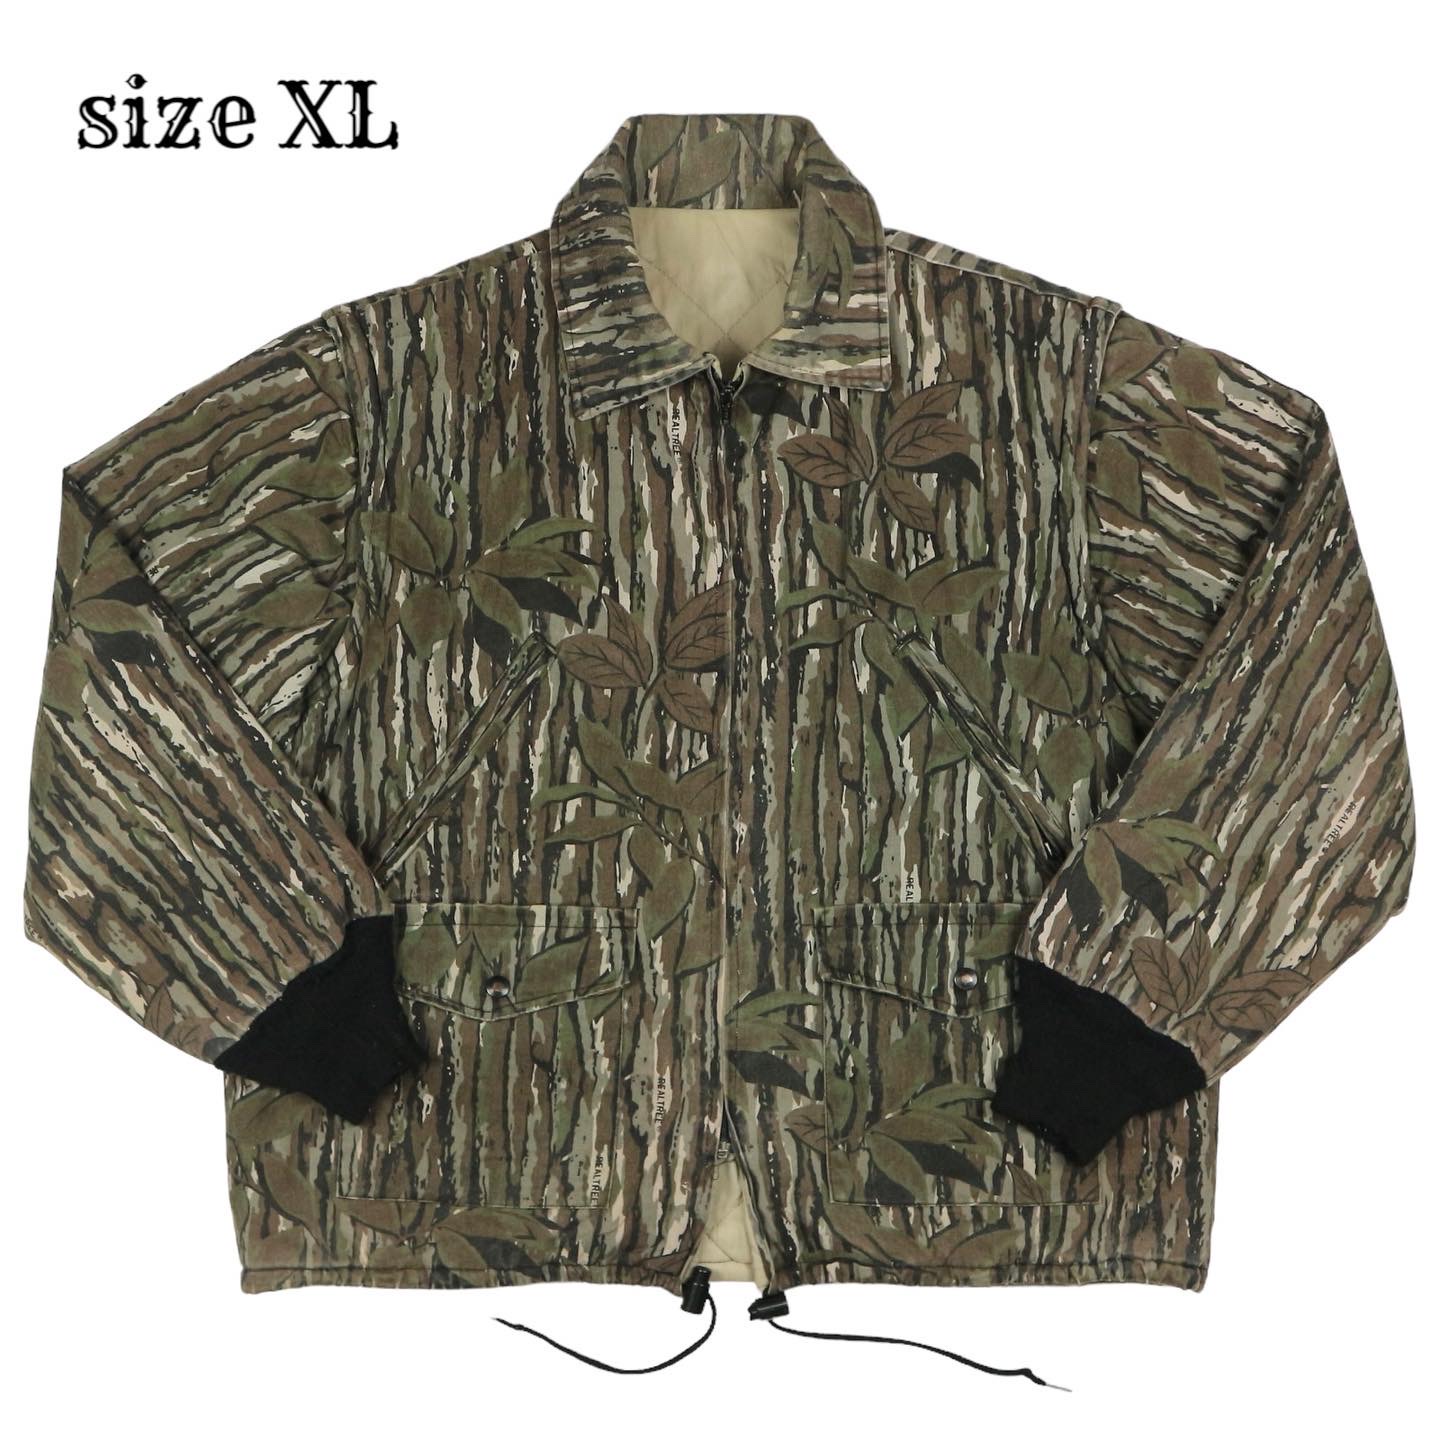 Johnson USA Realtree Hunting Jacket Size XL